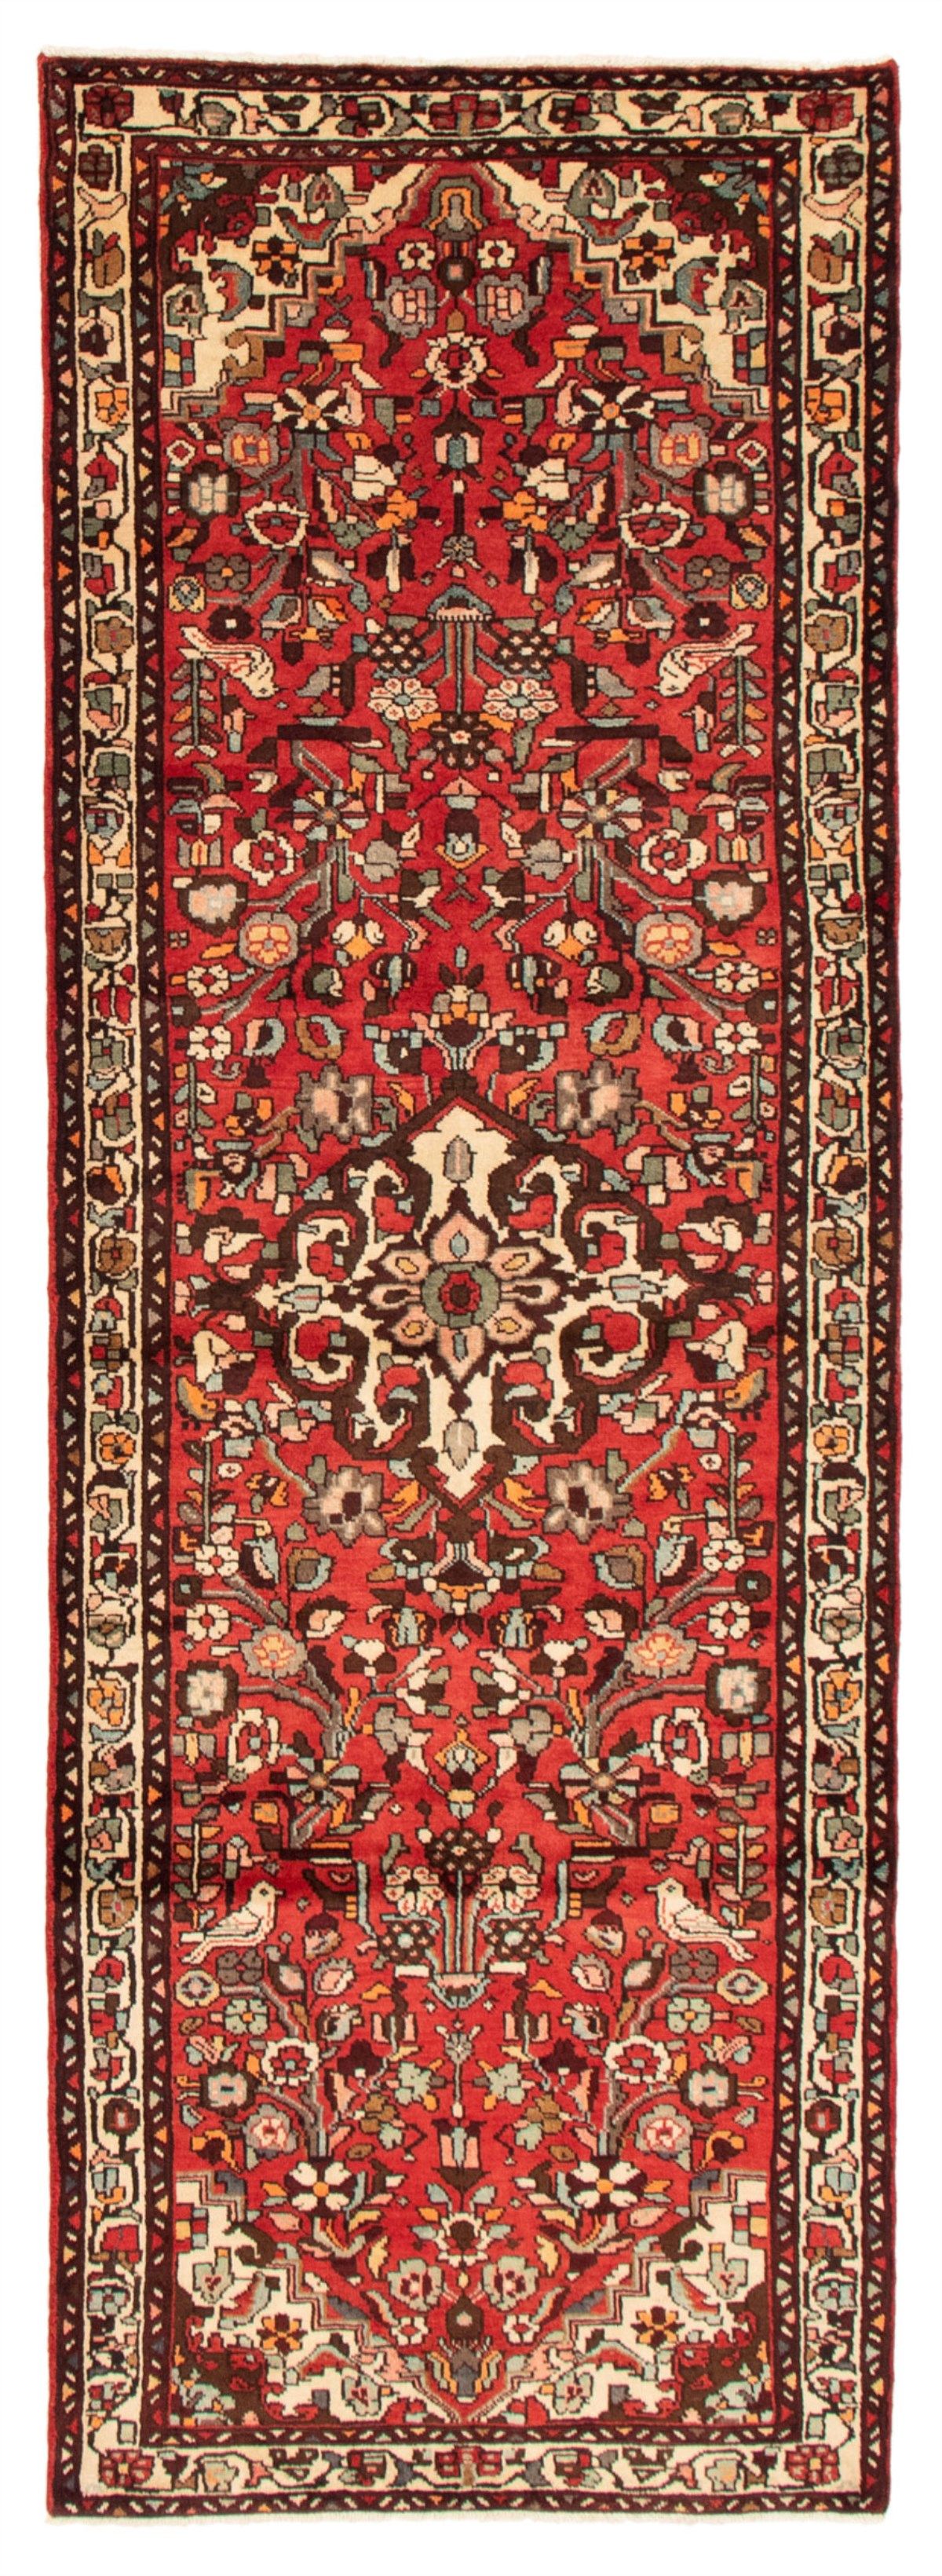 Traditional Persian Handmade Bokhara Circular Rug Burgundy/red 5' 3 x 5' ft Wool